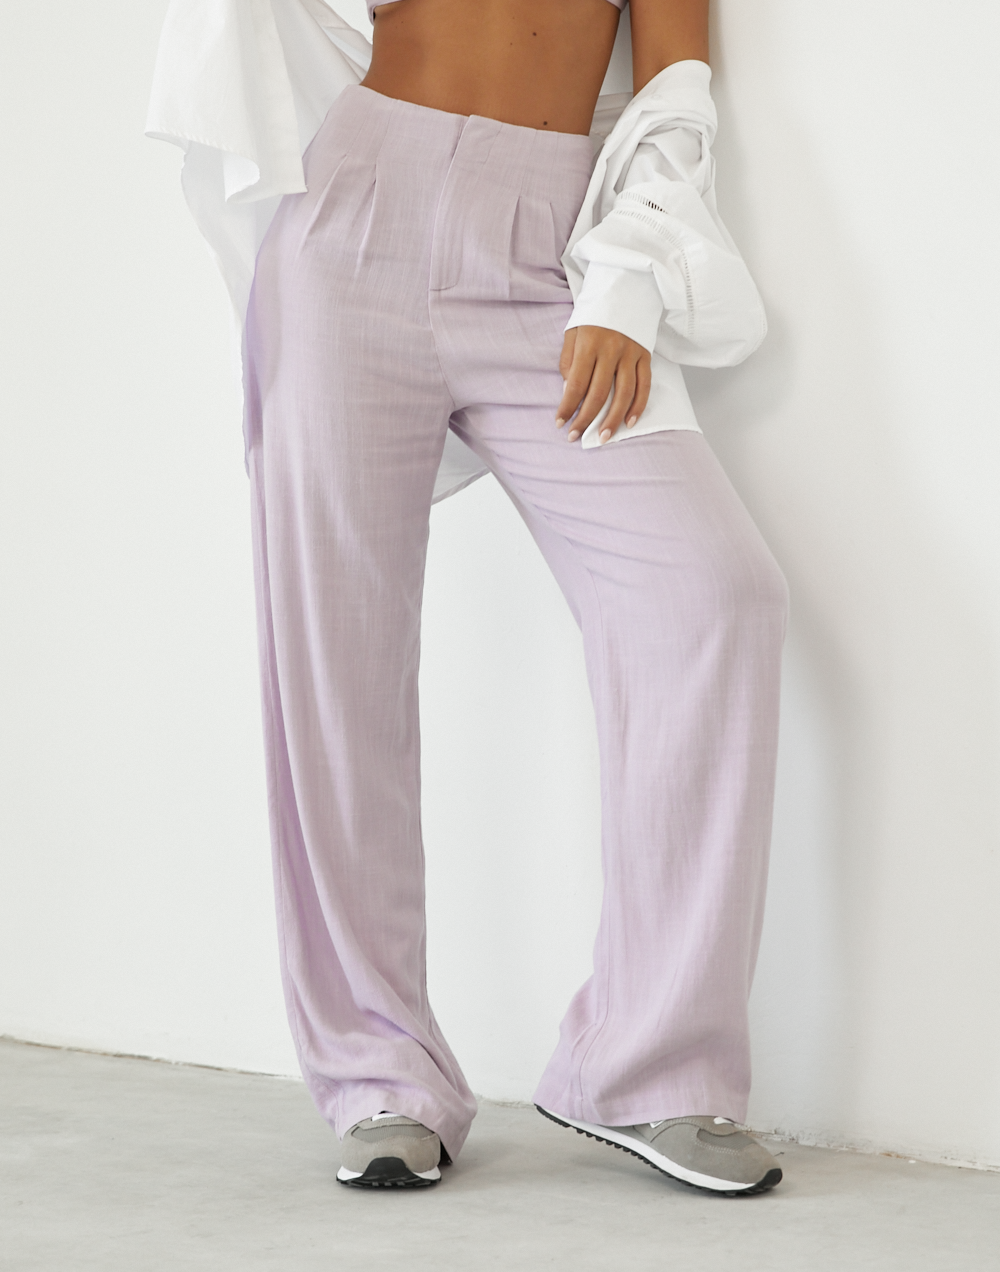 Finley Linen Pants (Lilac) - Lilac High Waisted Linen Pants - Women's Pants - Charcoal Clothing